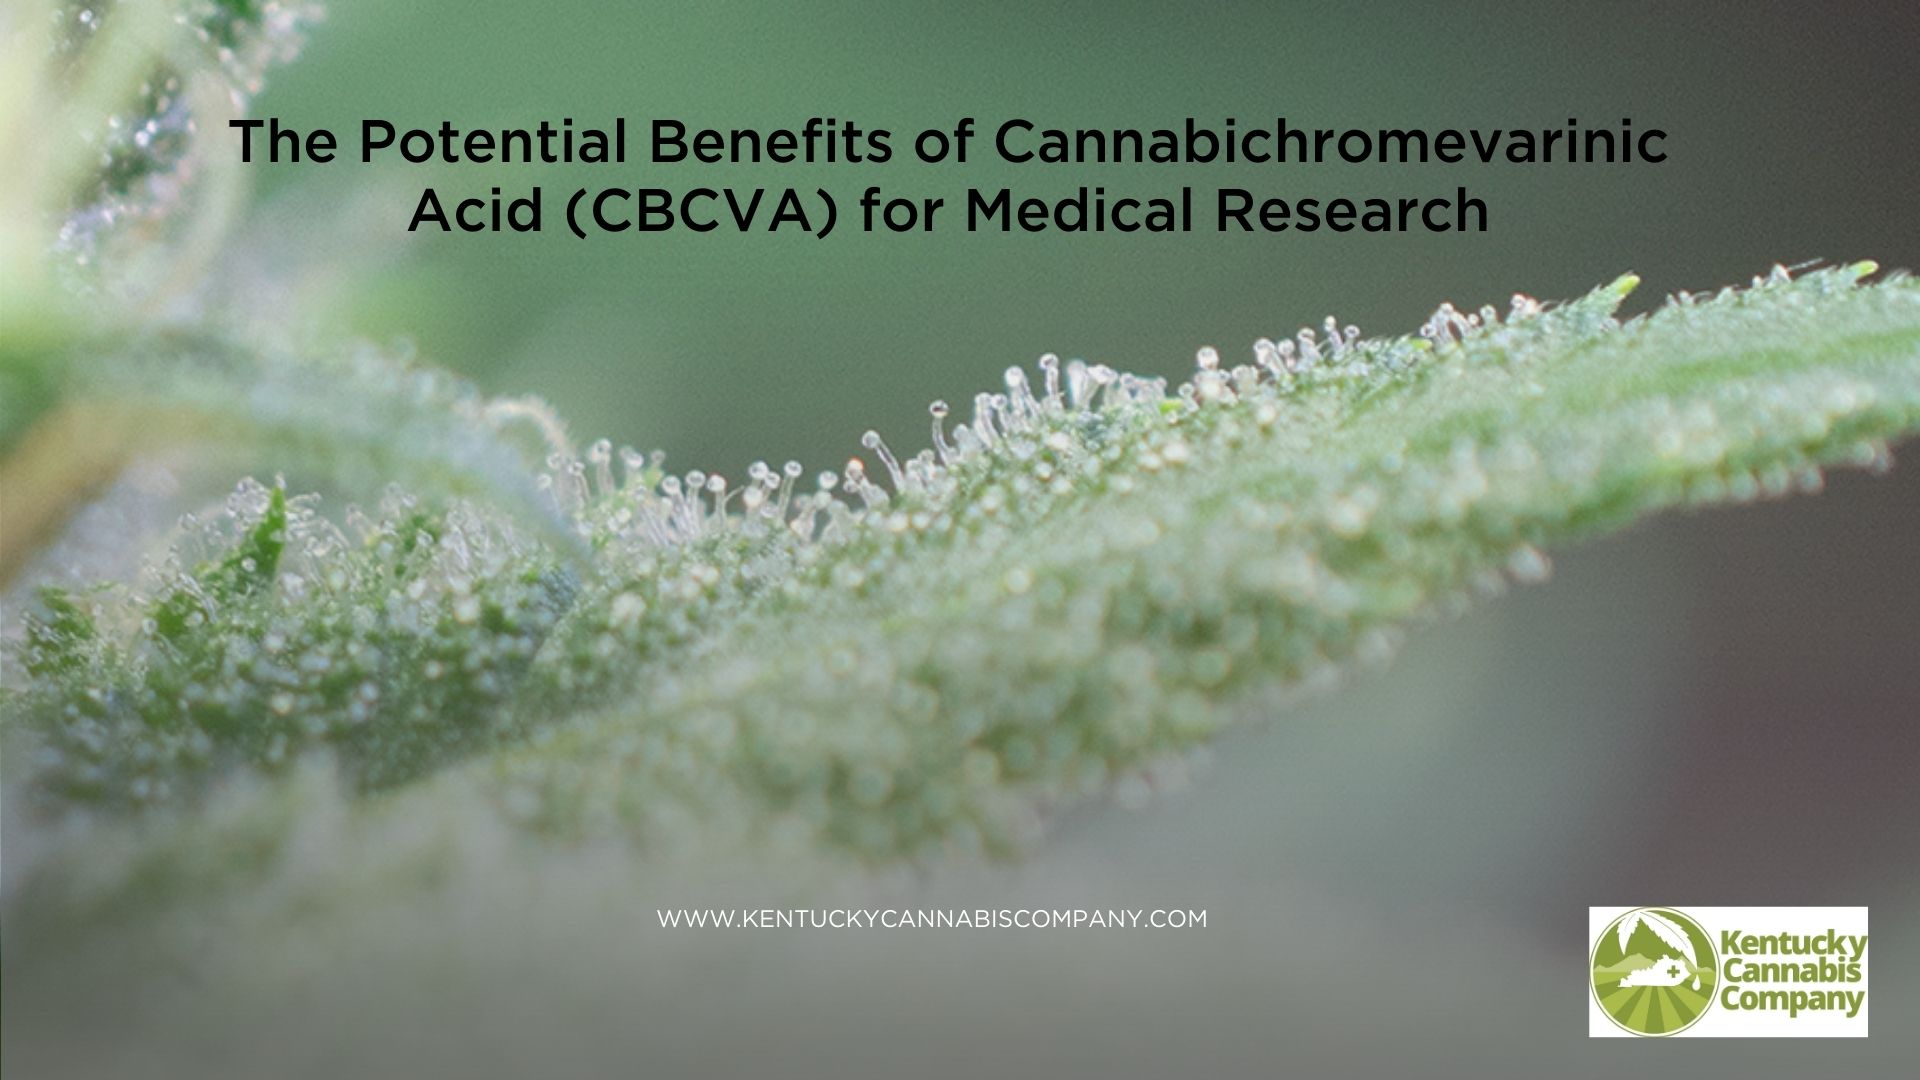 A cannabis leaf covered in trichomes containing Cannabichromevarinic Acid (CBCVA)